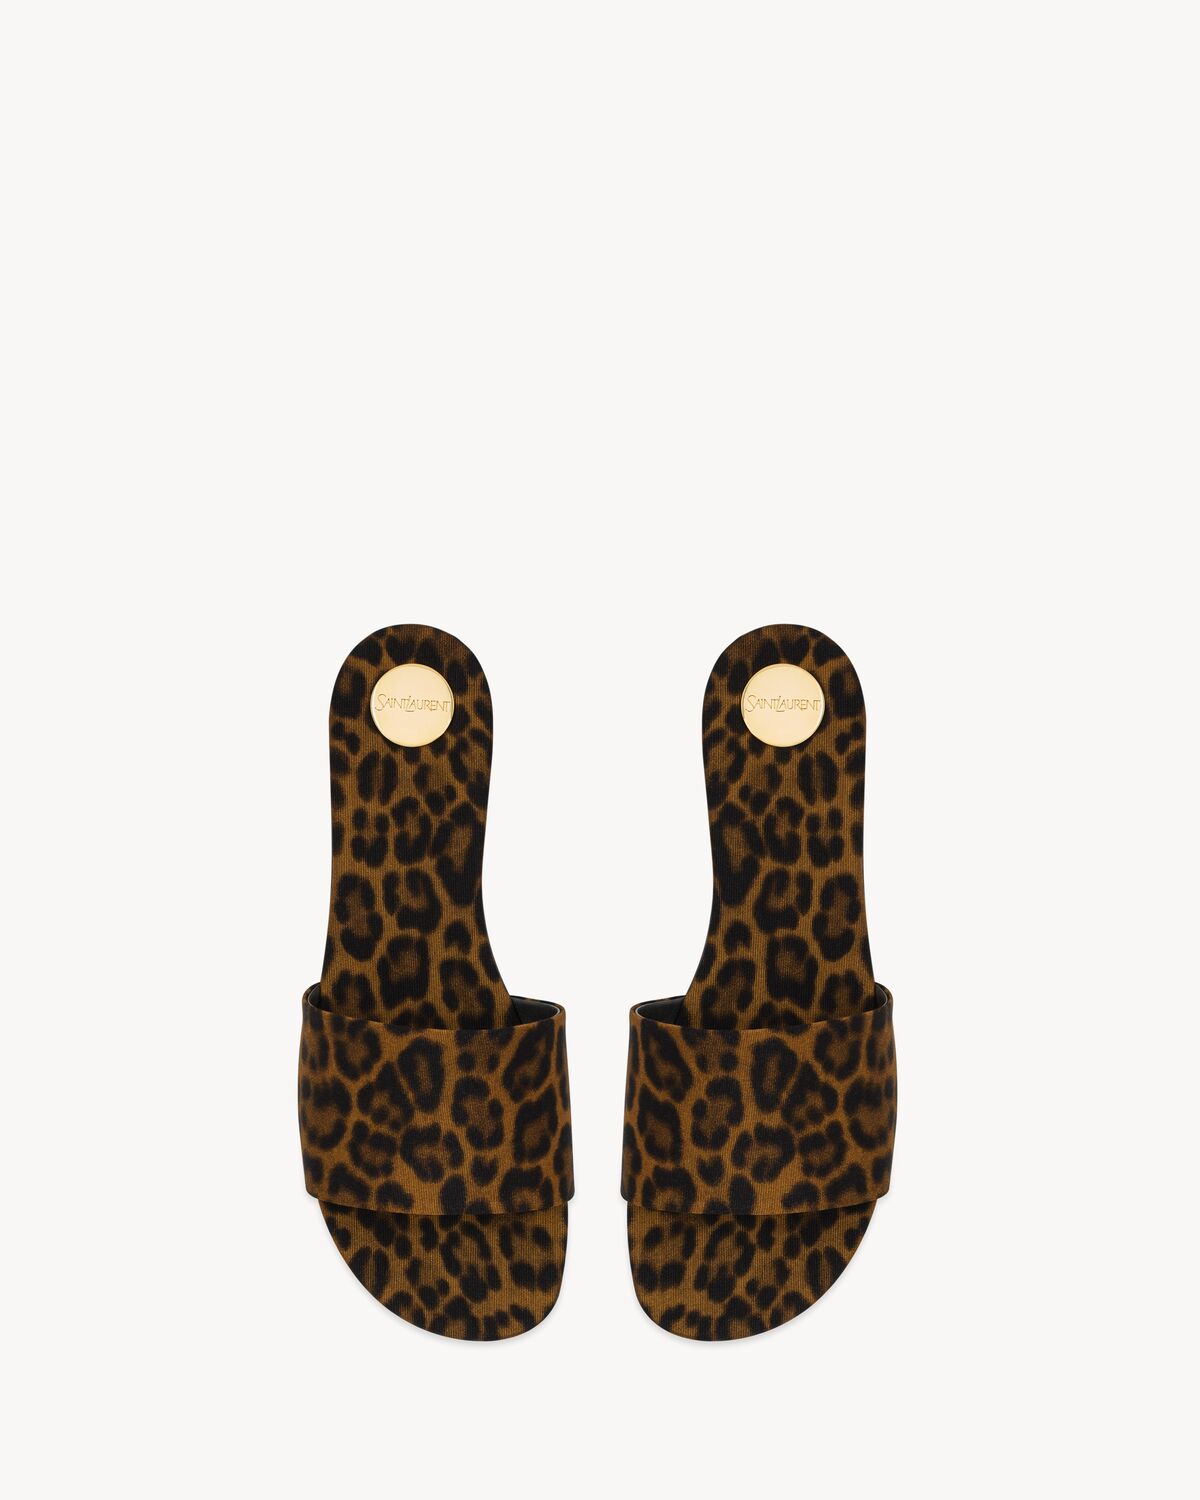 CARLYLE slides in leopard grosgrain